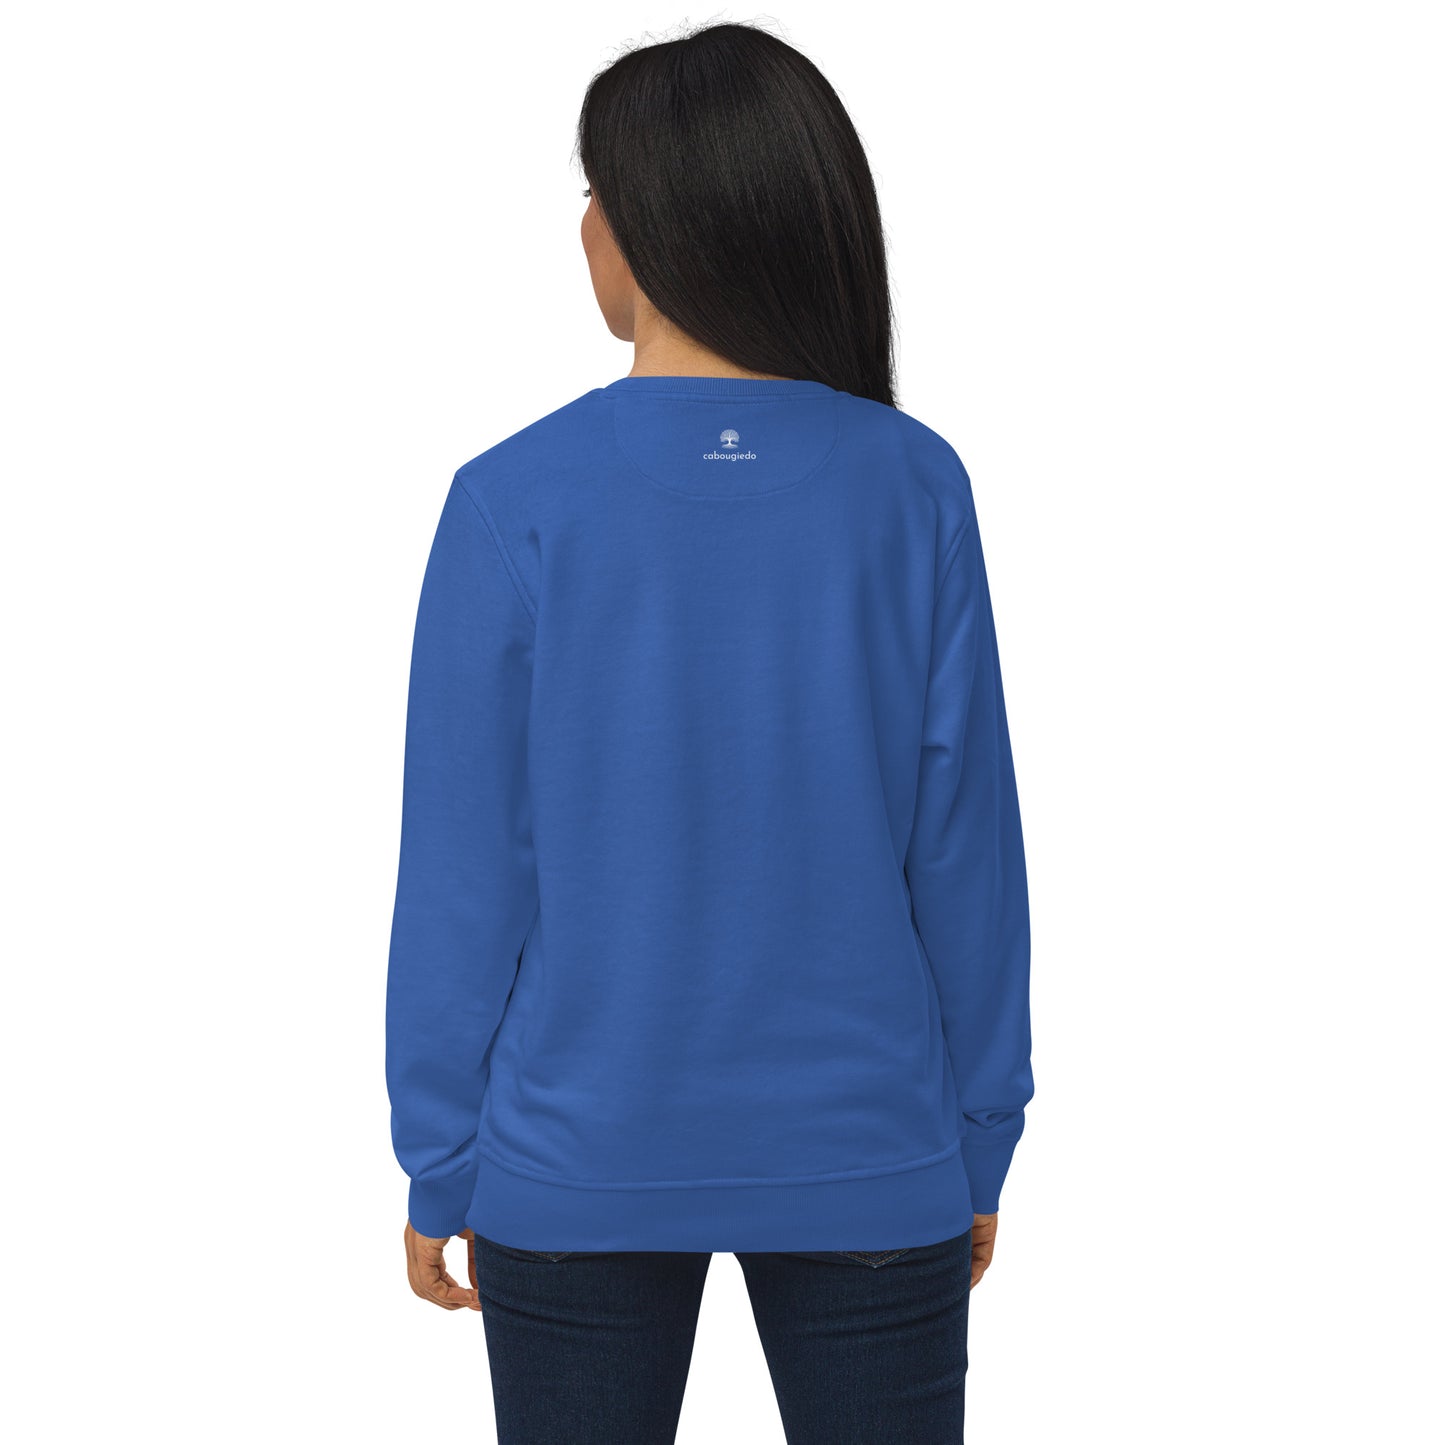 Unisex organic sweatshirt - Young Black Freeish Since 1865